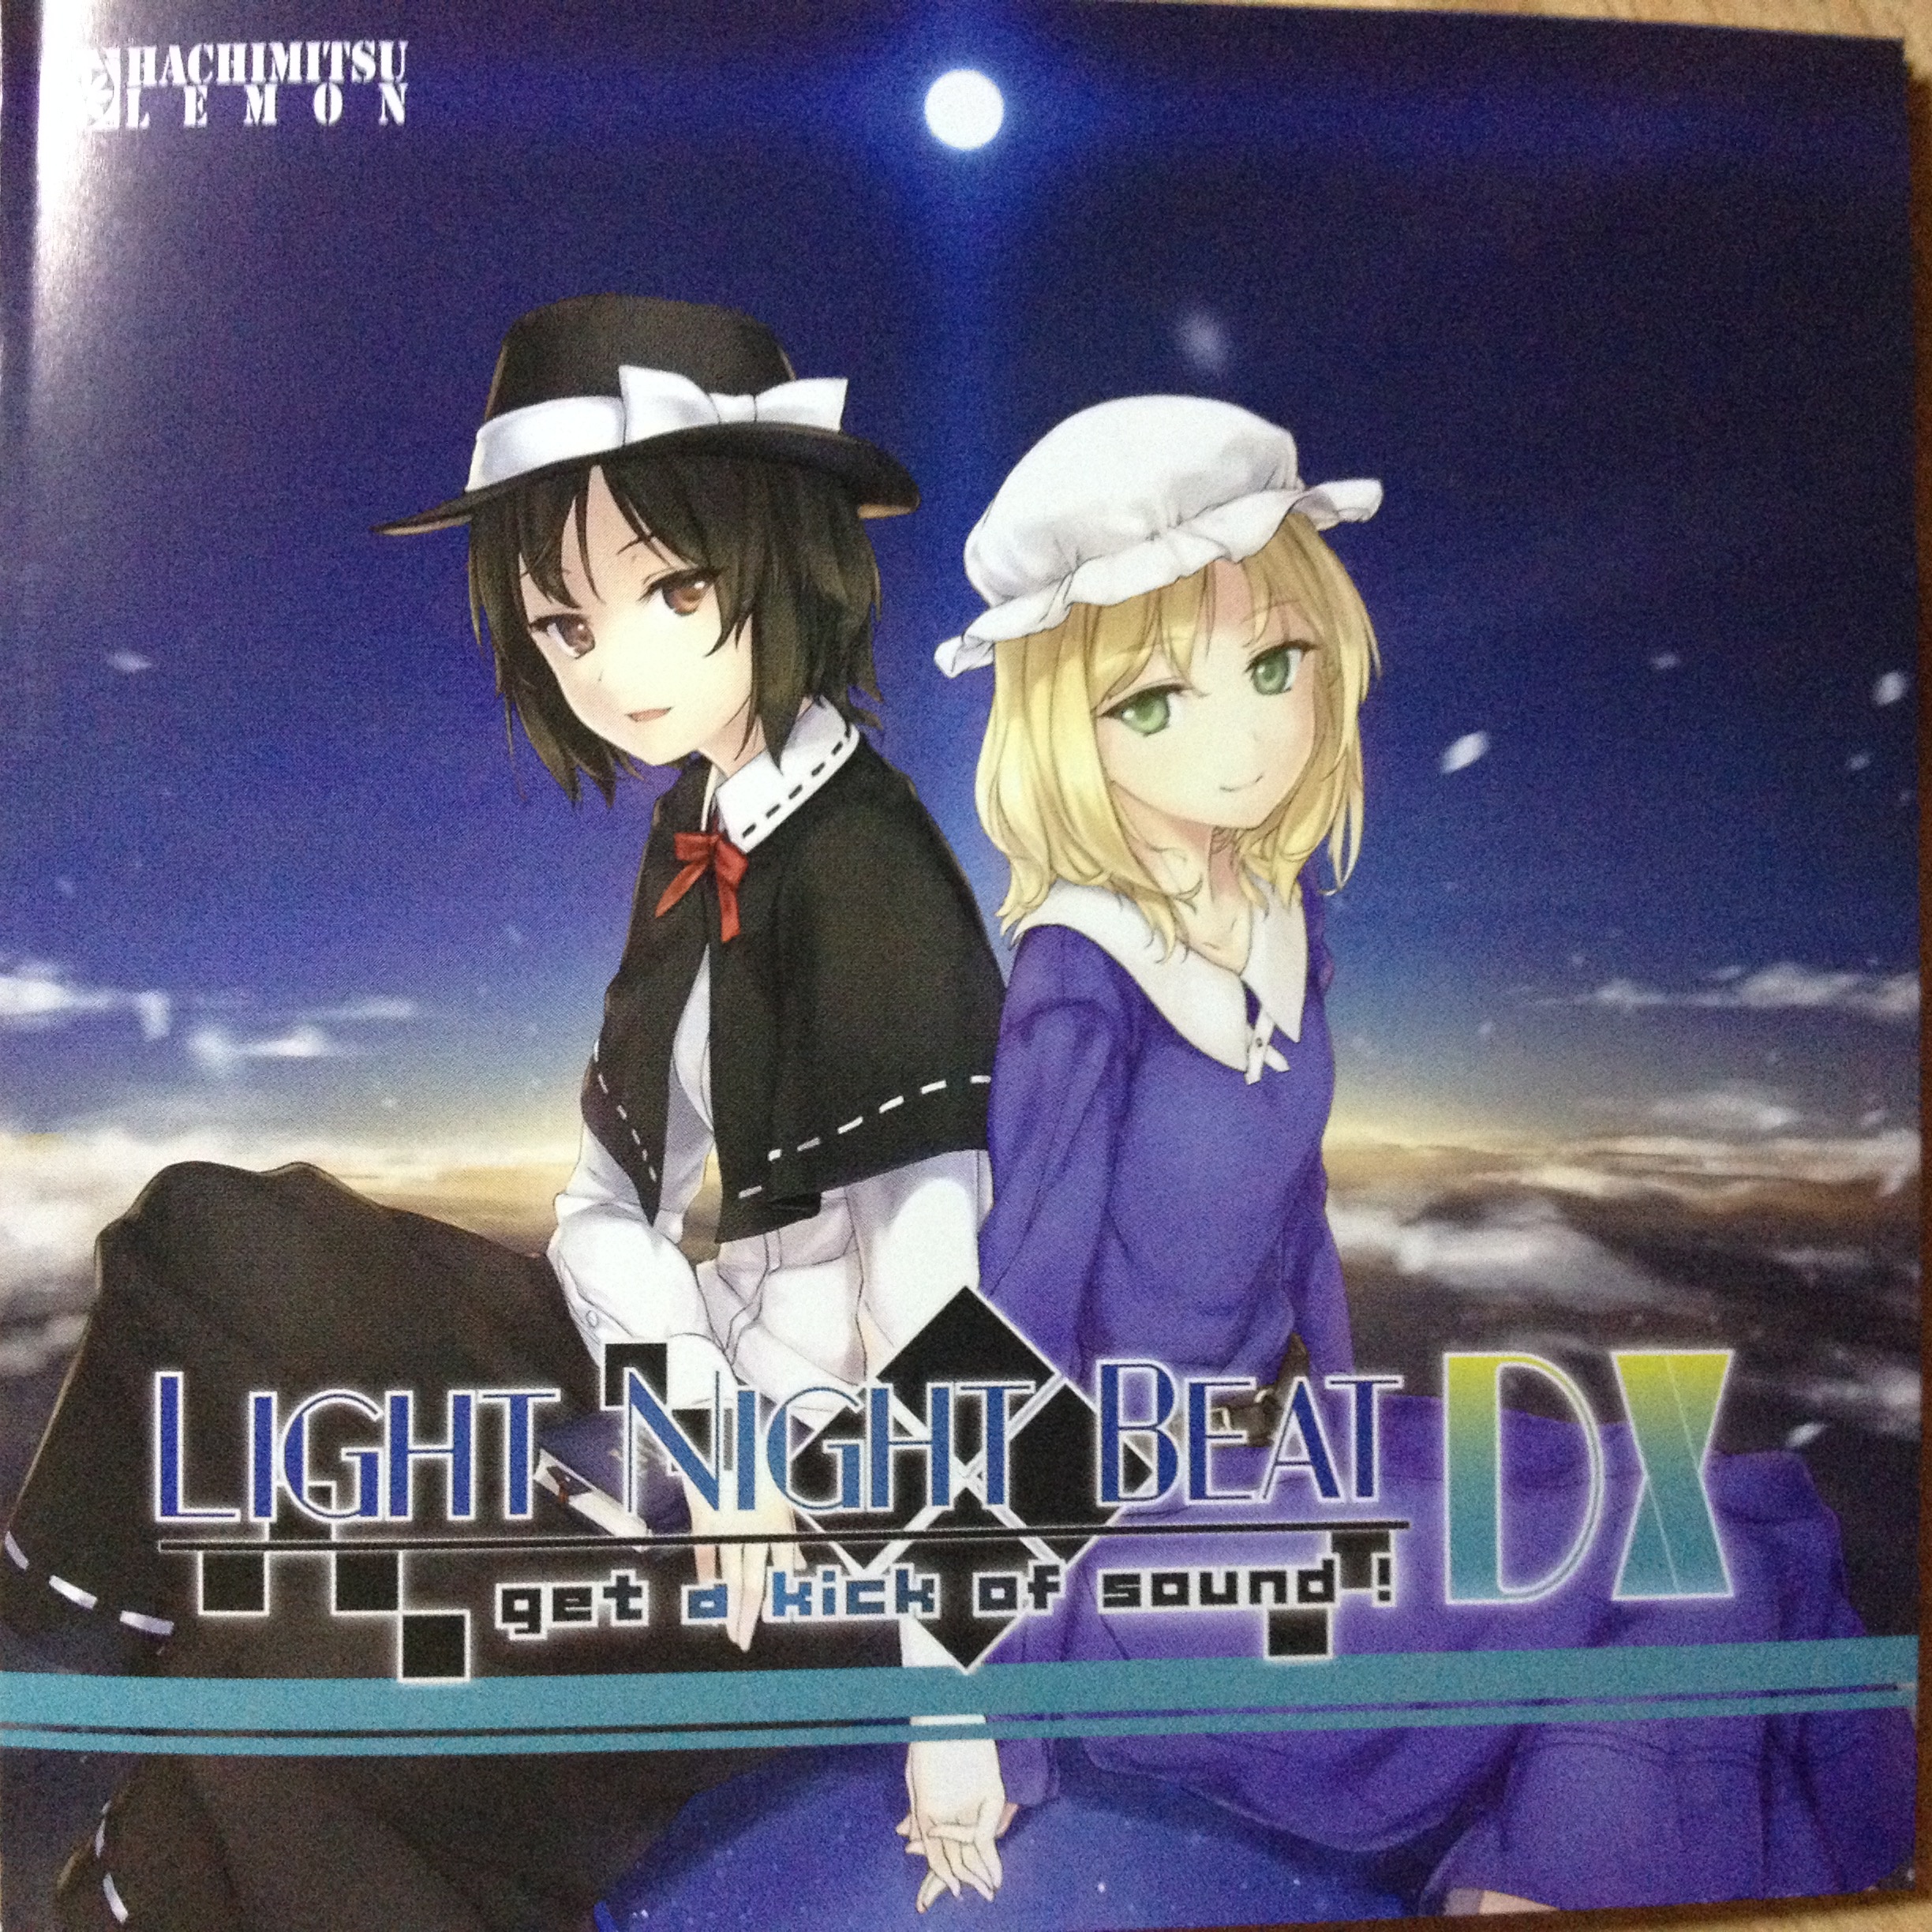 Light Night Beat DX